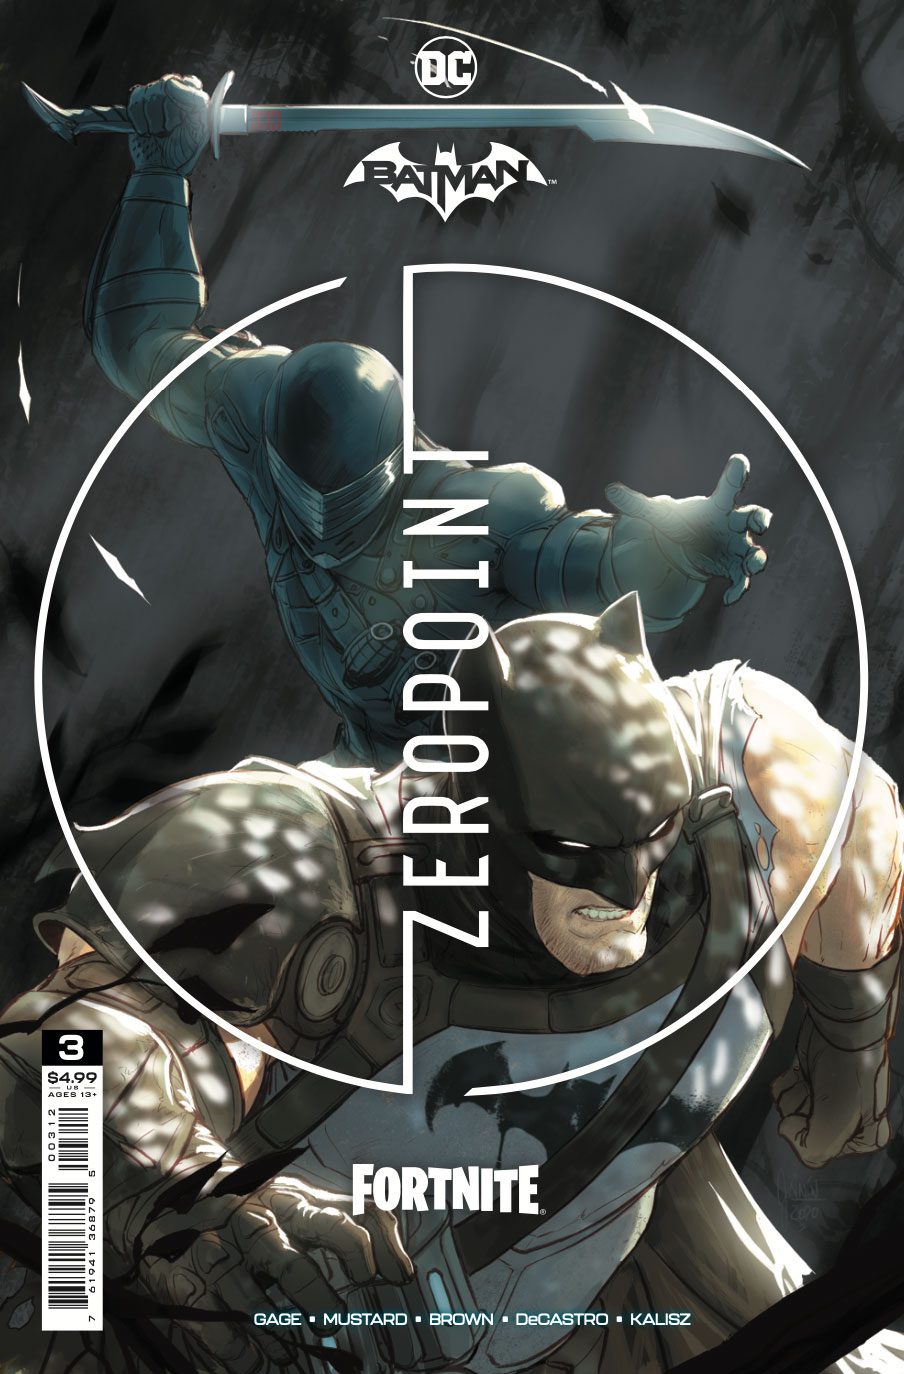 BATMAN FORTNITE ZERO POINT #3 (second printing)